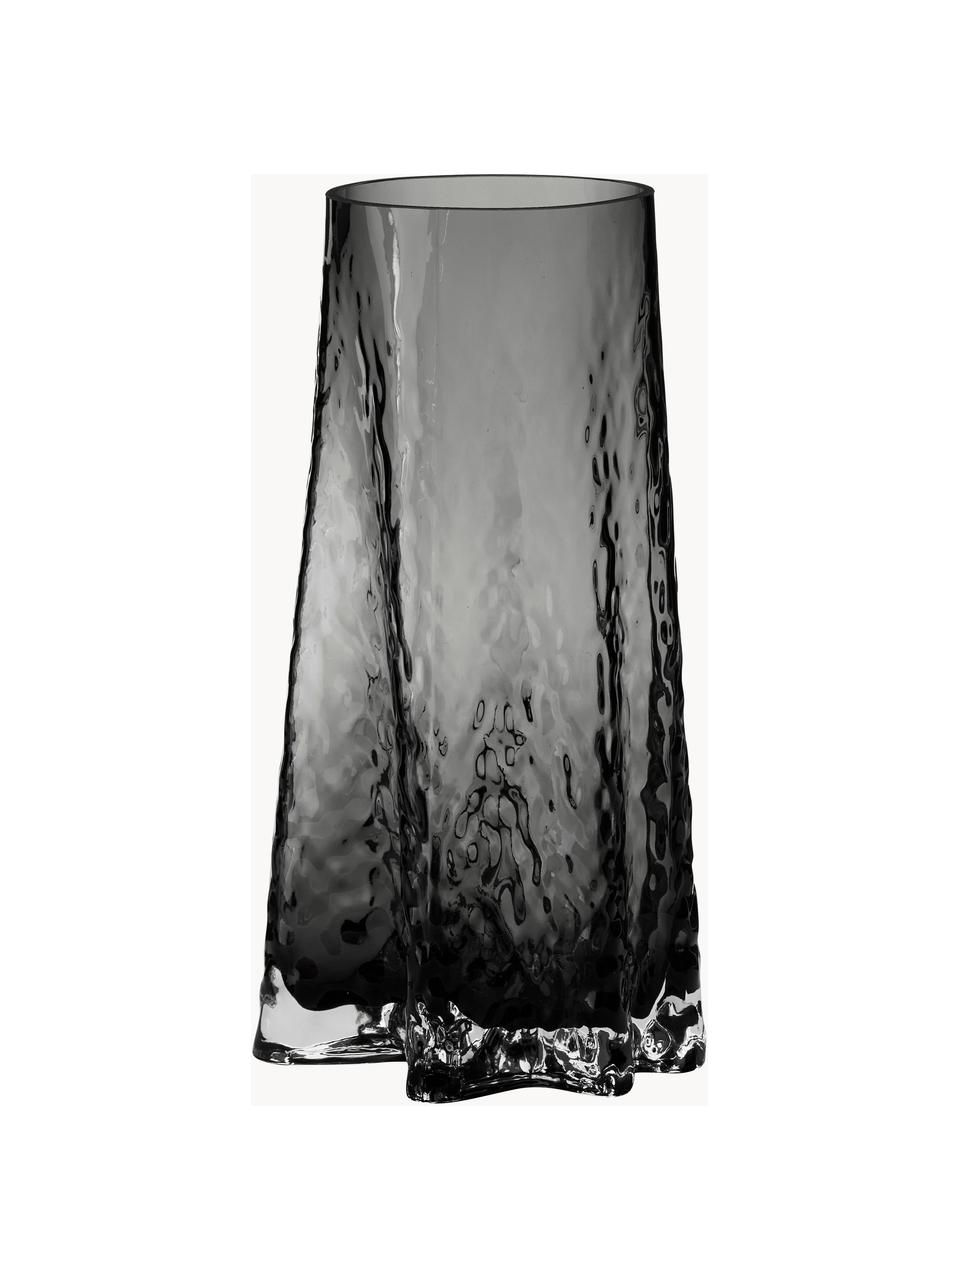 Mundgeblasene Glas-Vase Gry mit strukturierter Oberfläche, H 30 cm, Glas, mundgeblasen, Anthrazit, semi-transparent, Ø 15 x H 30 cm